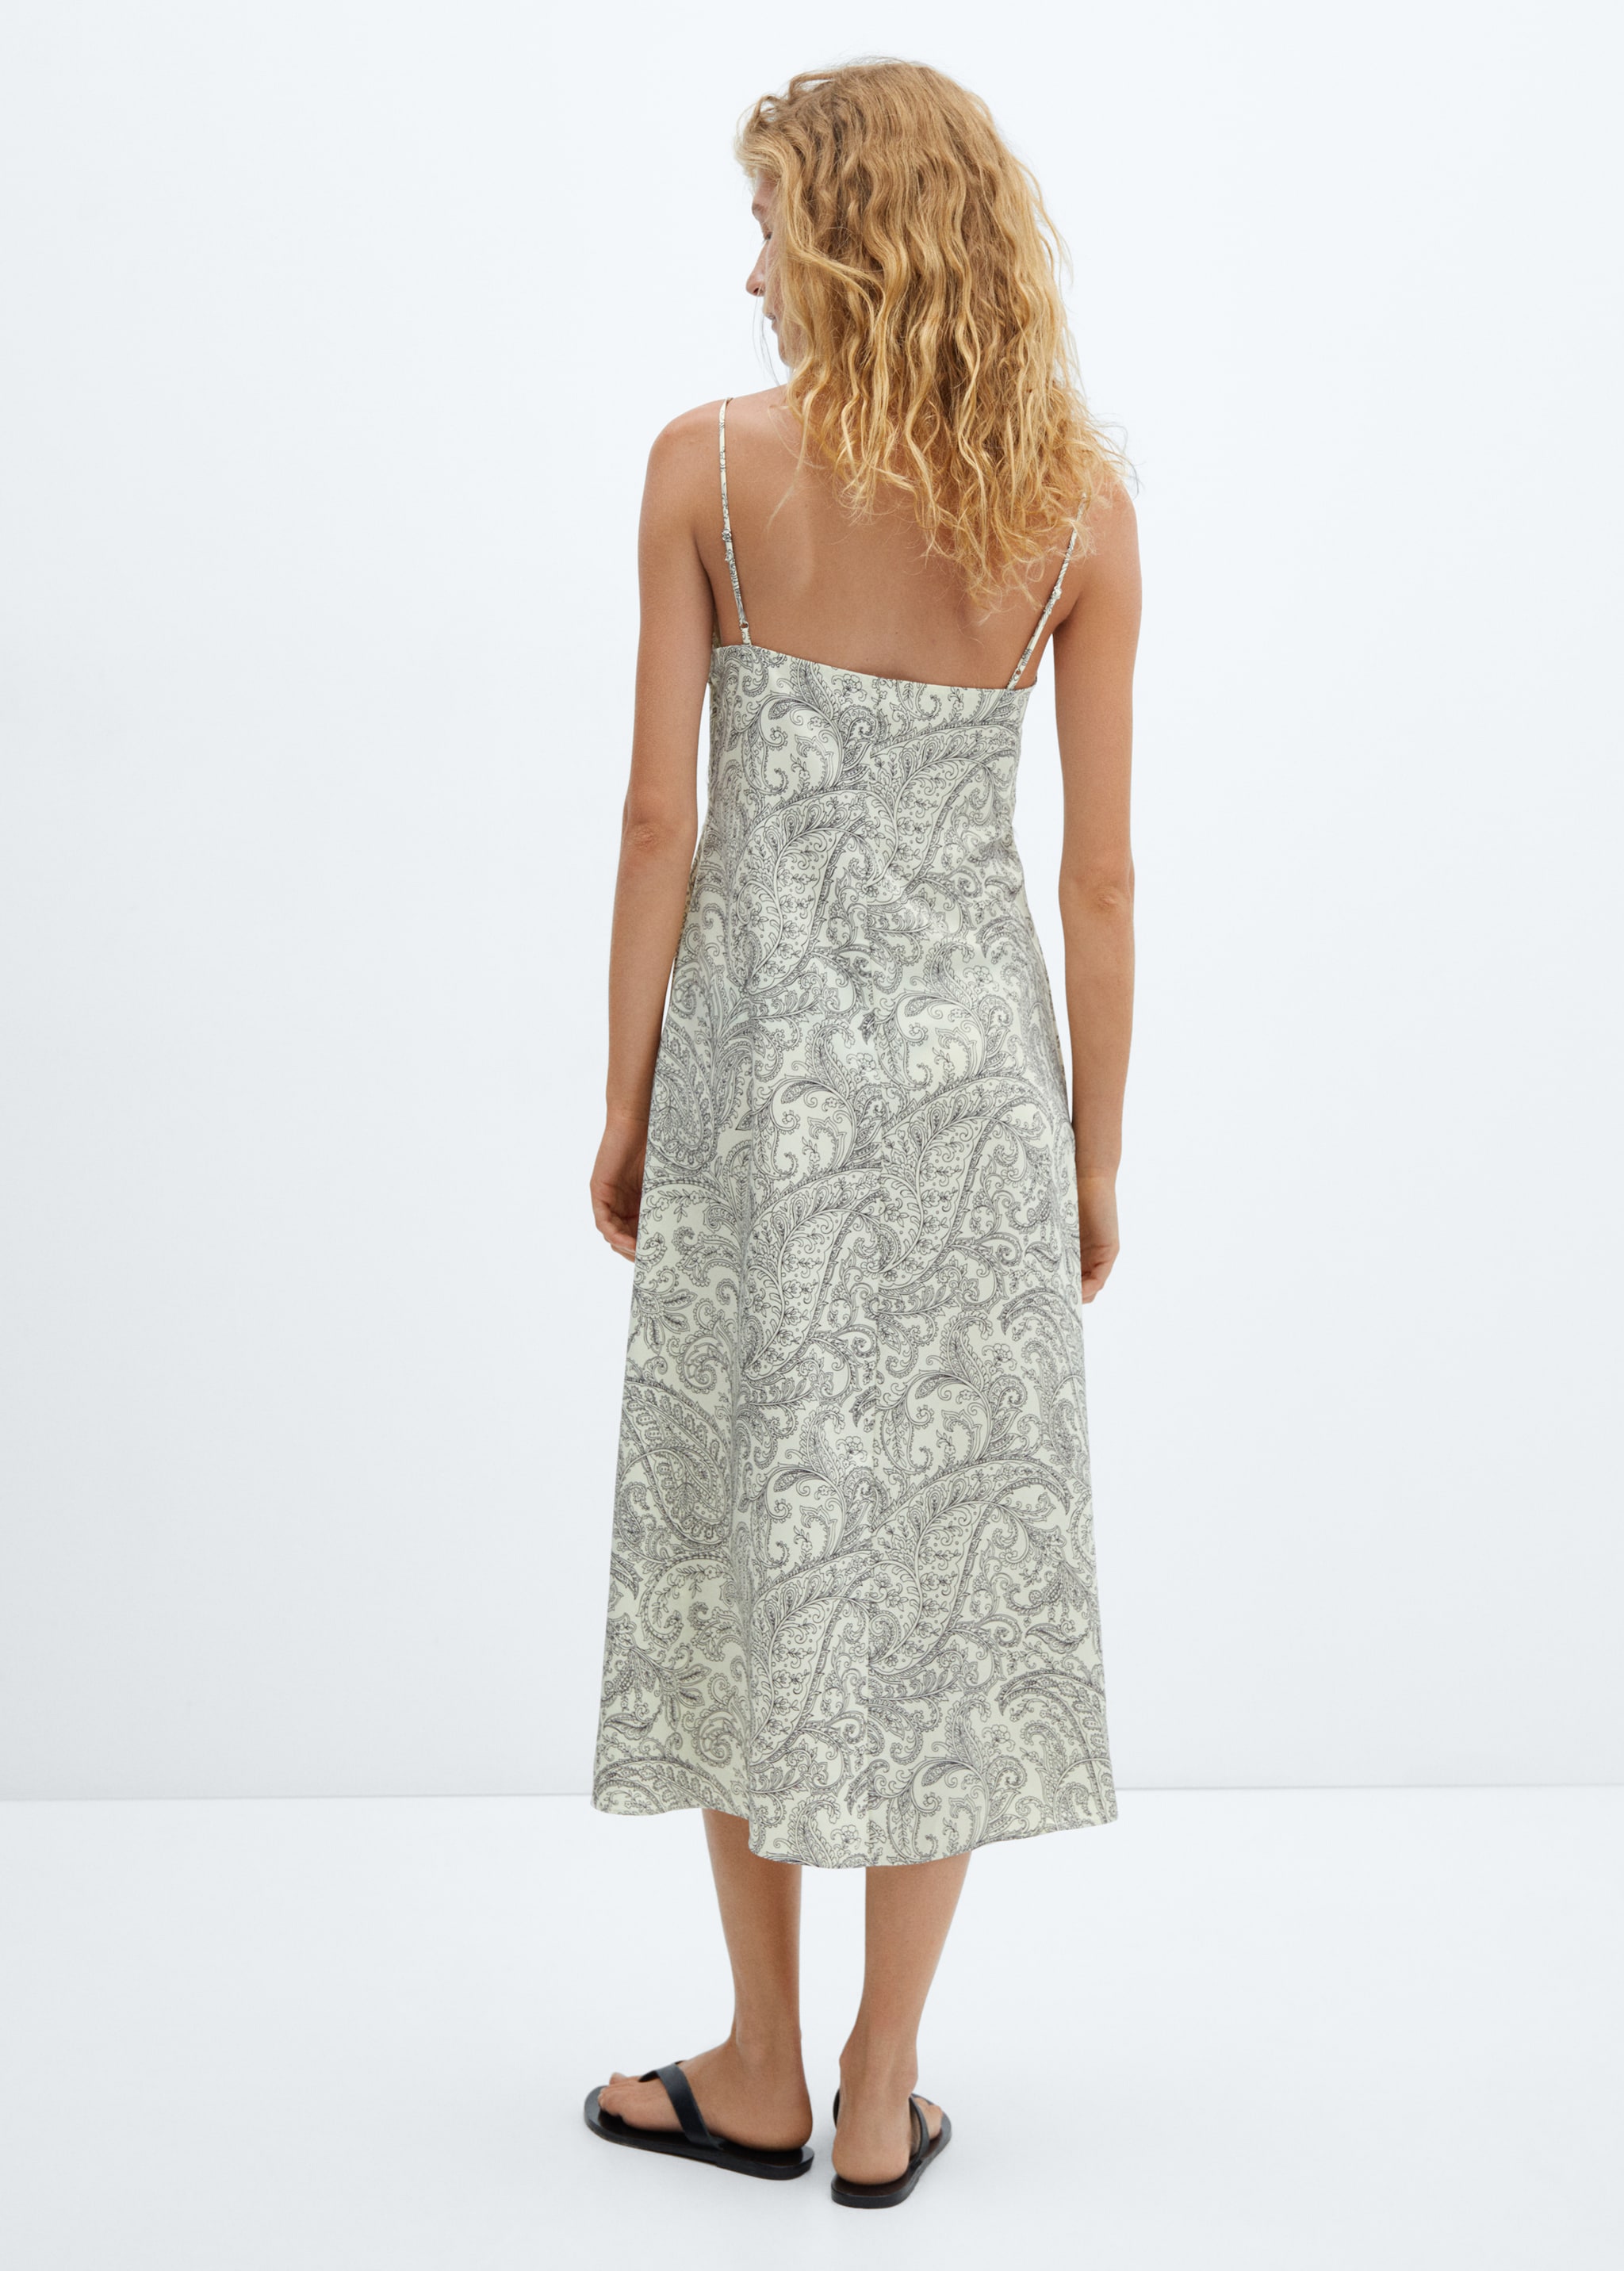 Lingerie-Kleid mit Paisley-Muster - Rückseite des Artikels